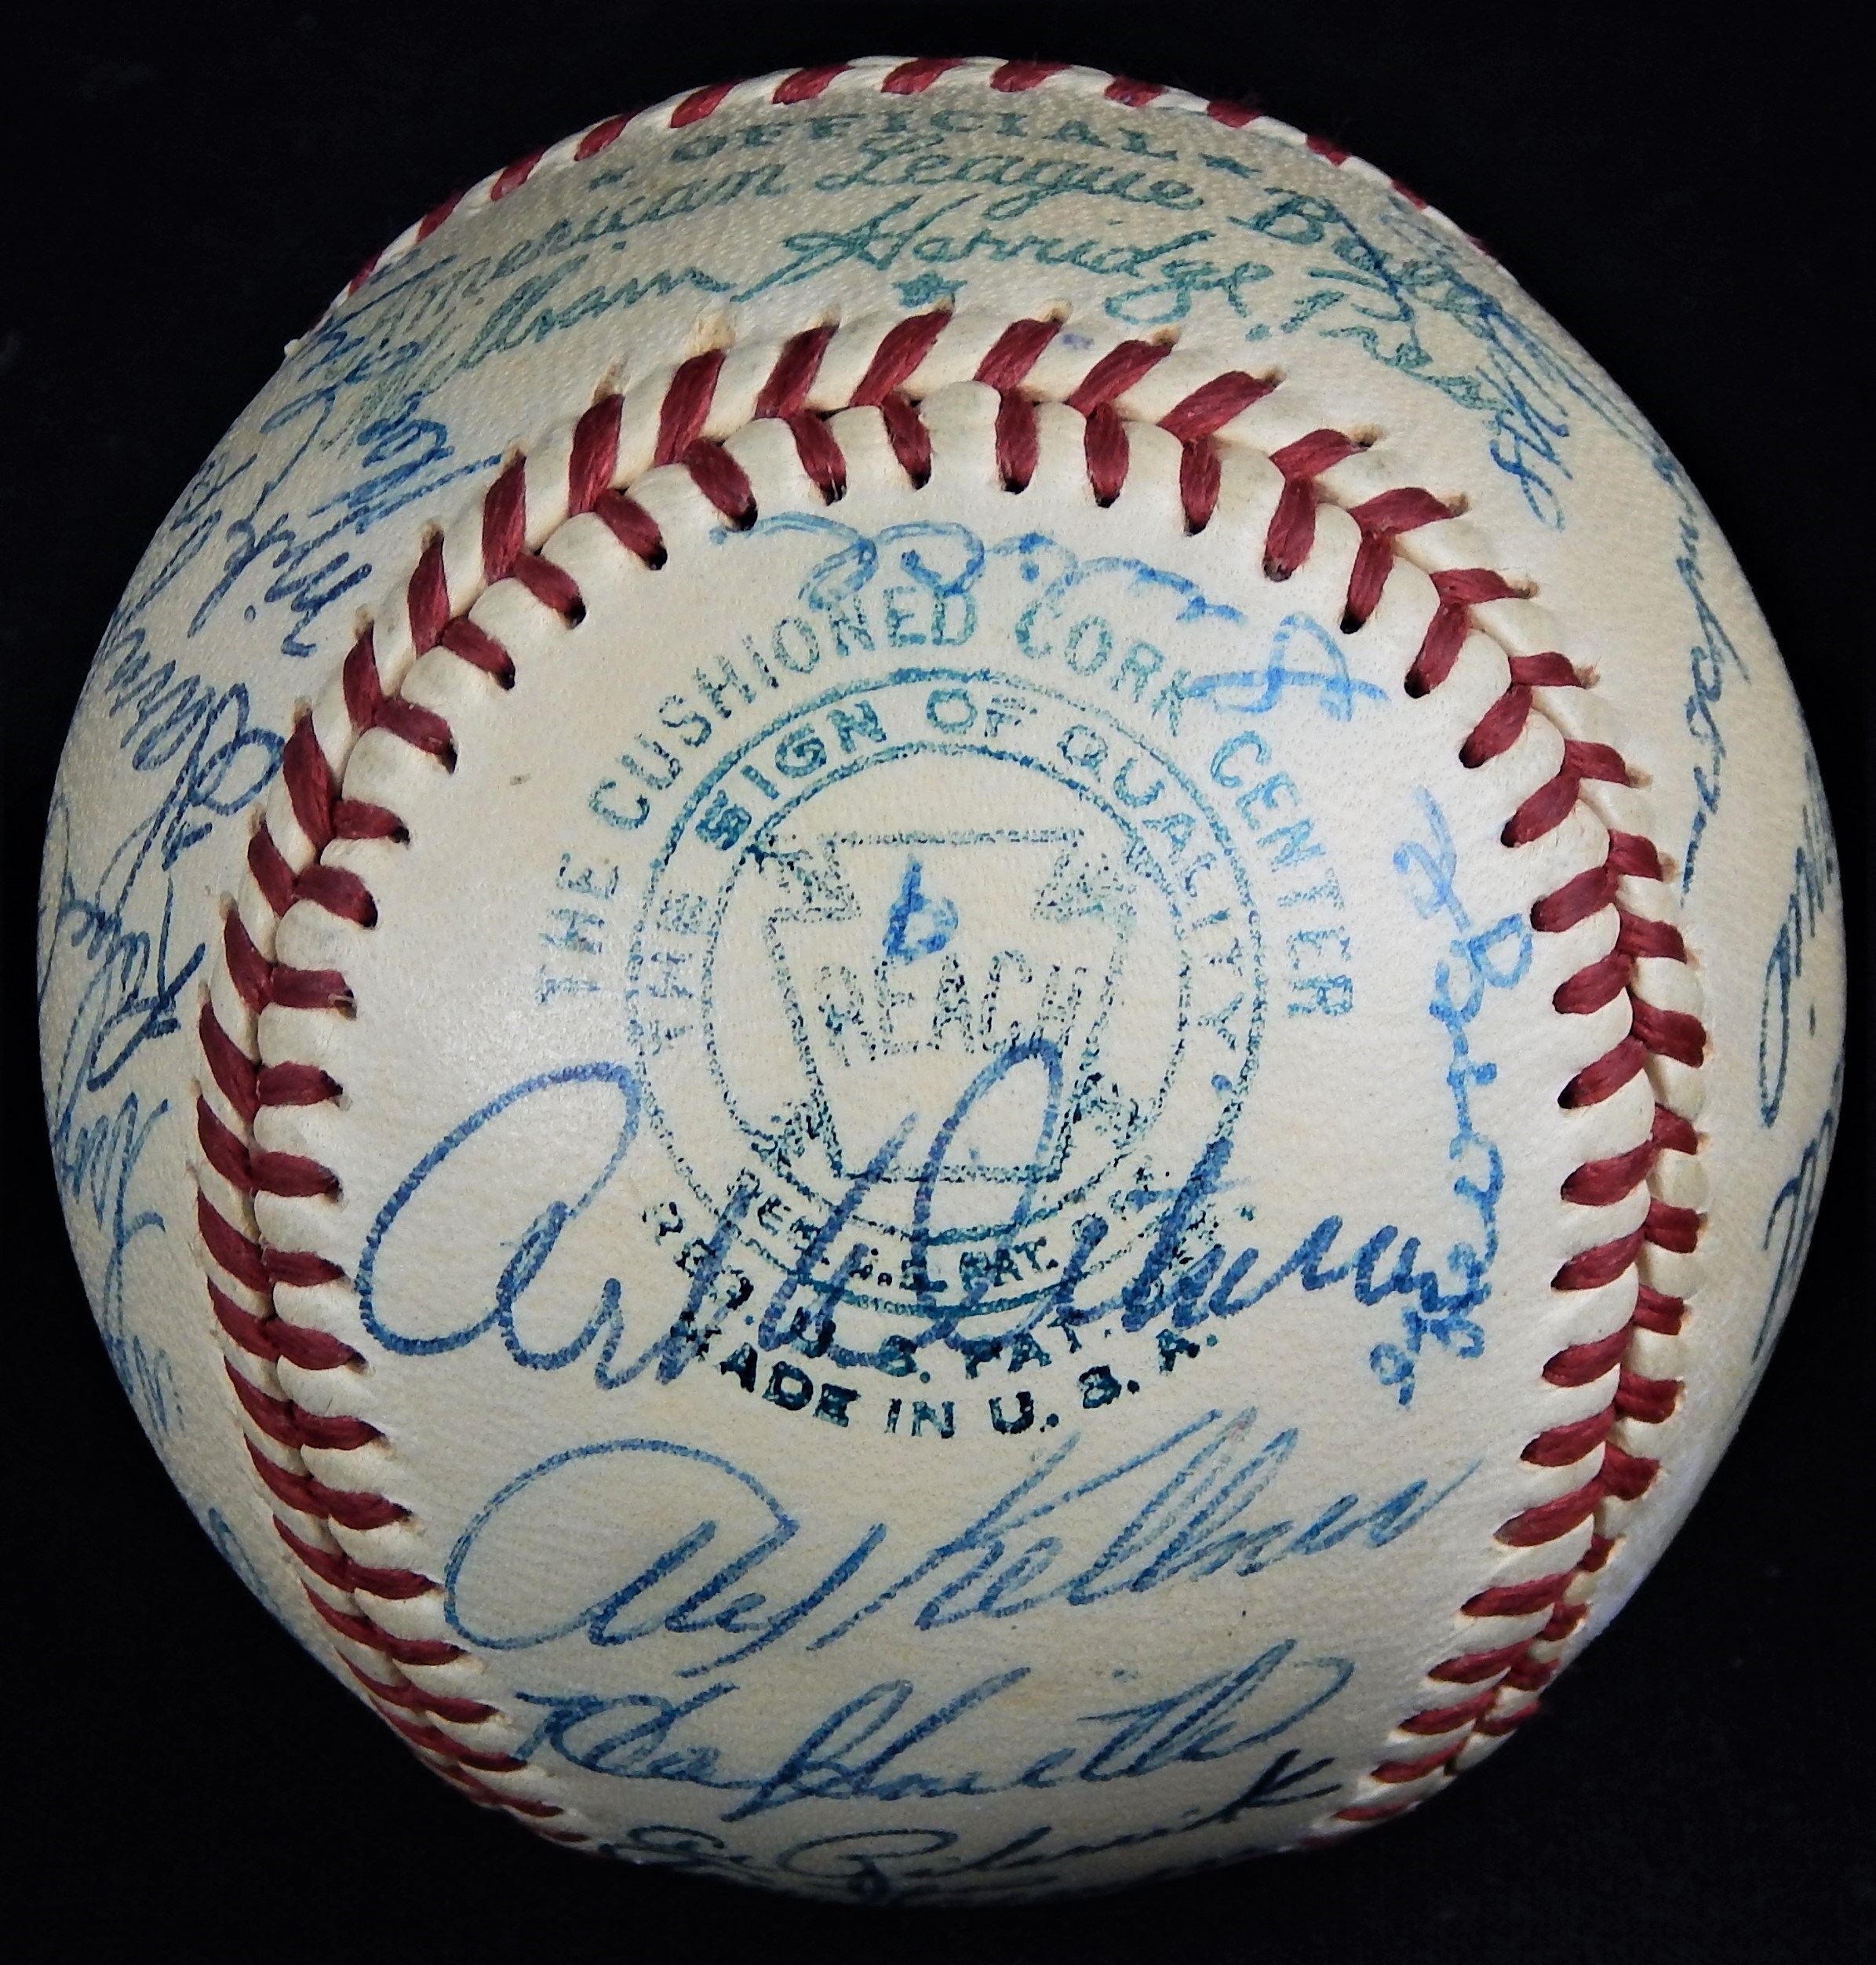 Baseball Autographs - 1956 Kansas City Athletics Team Signed Ball From with Bobby Shantz